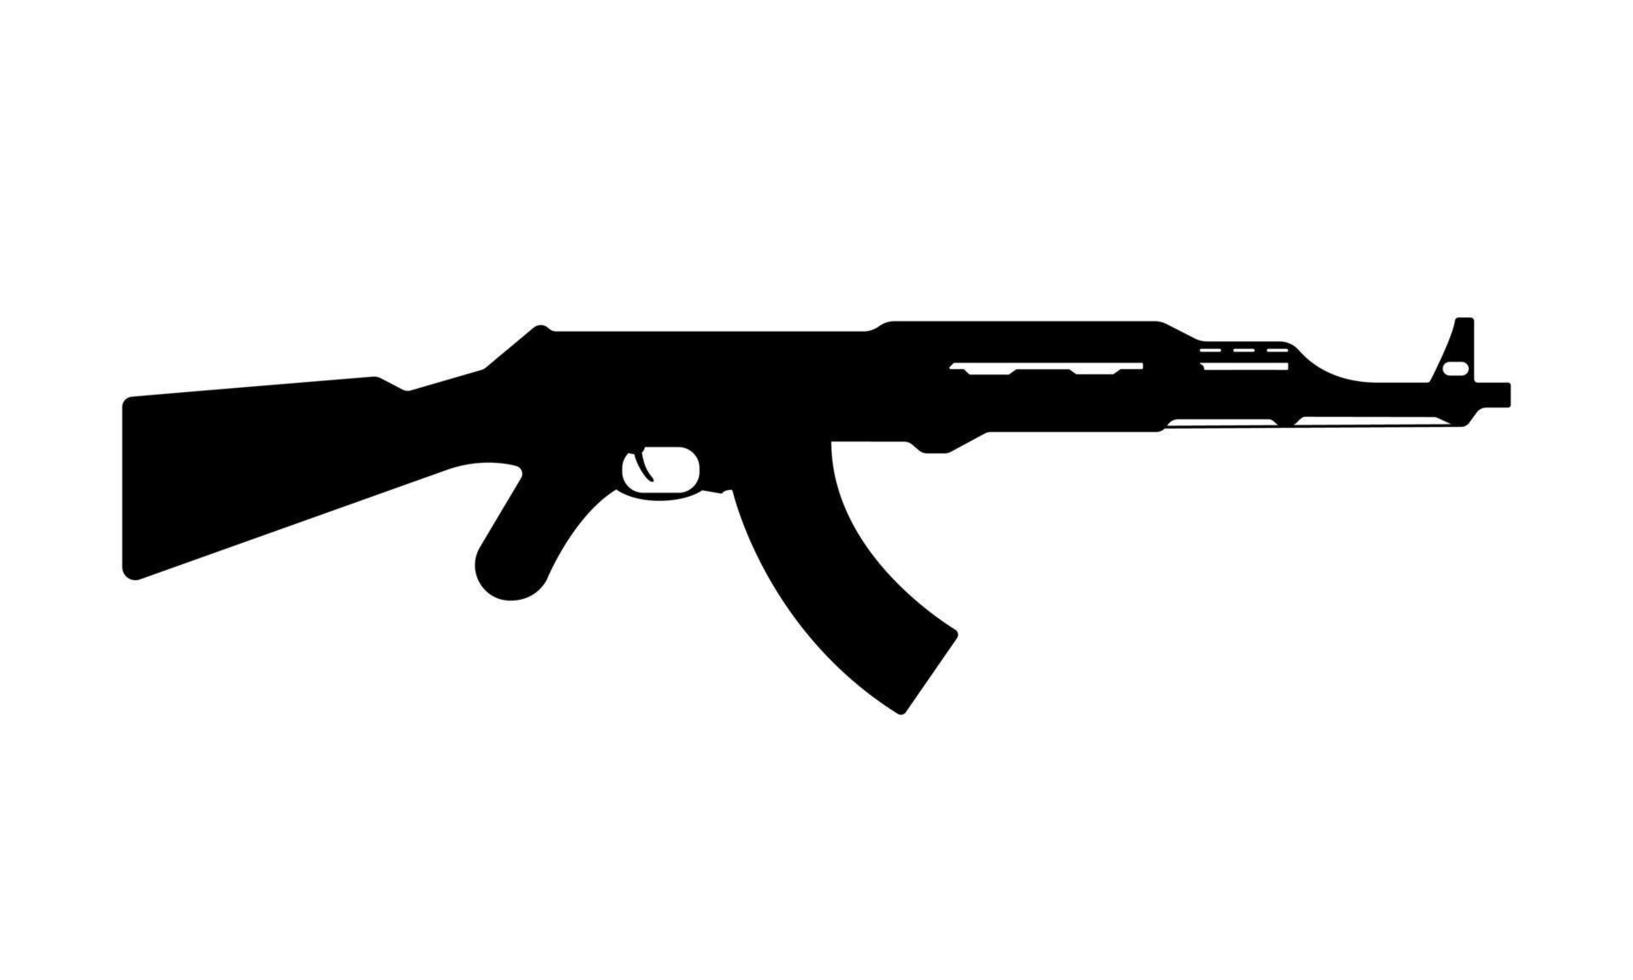 Ak47 Silhouette Icon. Kalashnikov Assault Rifle Pictogram. Russian Machine Gun Icon. Weapon Symbol. Steel War Ammunition. AK 47 Single Logo Design. Isolated Vector Illustration.